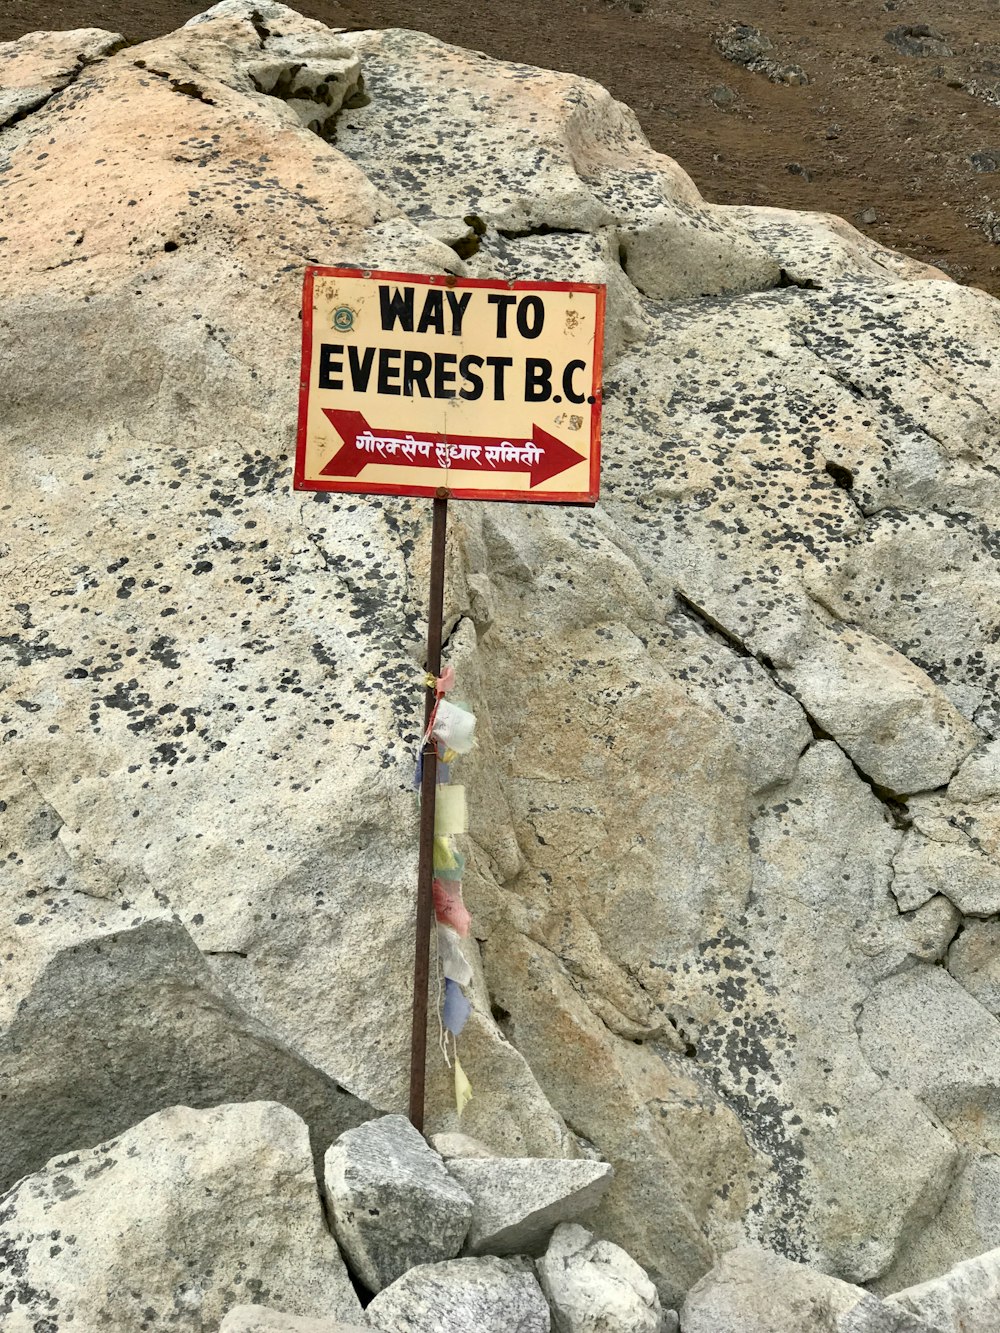 Way to Everest B.C. signage near rock at daytime